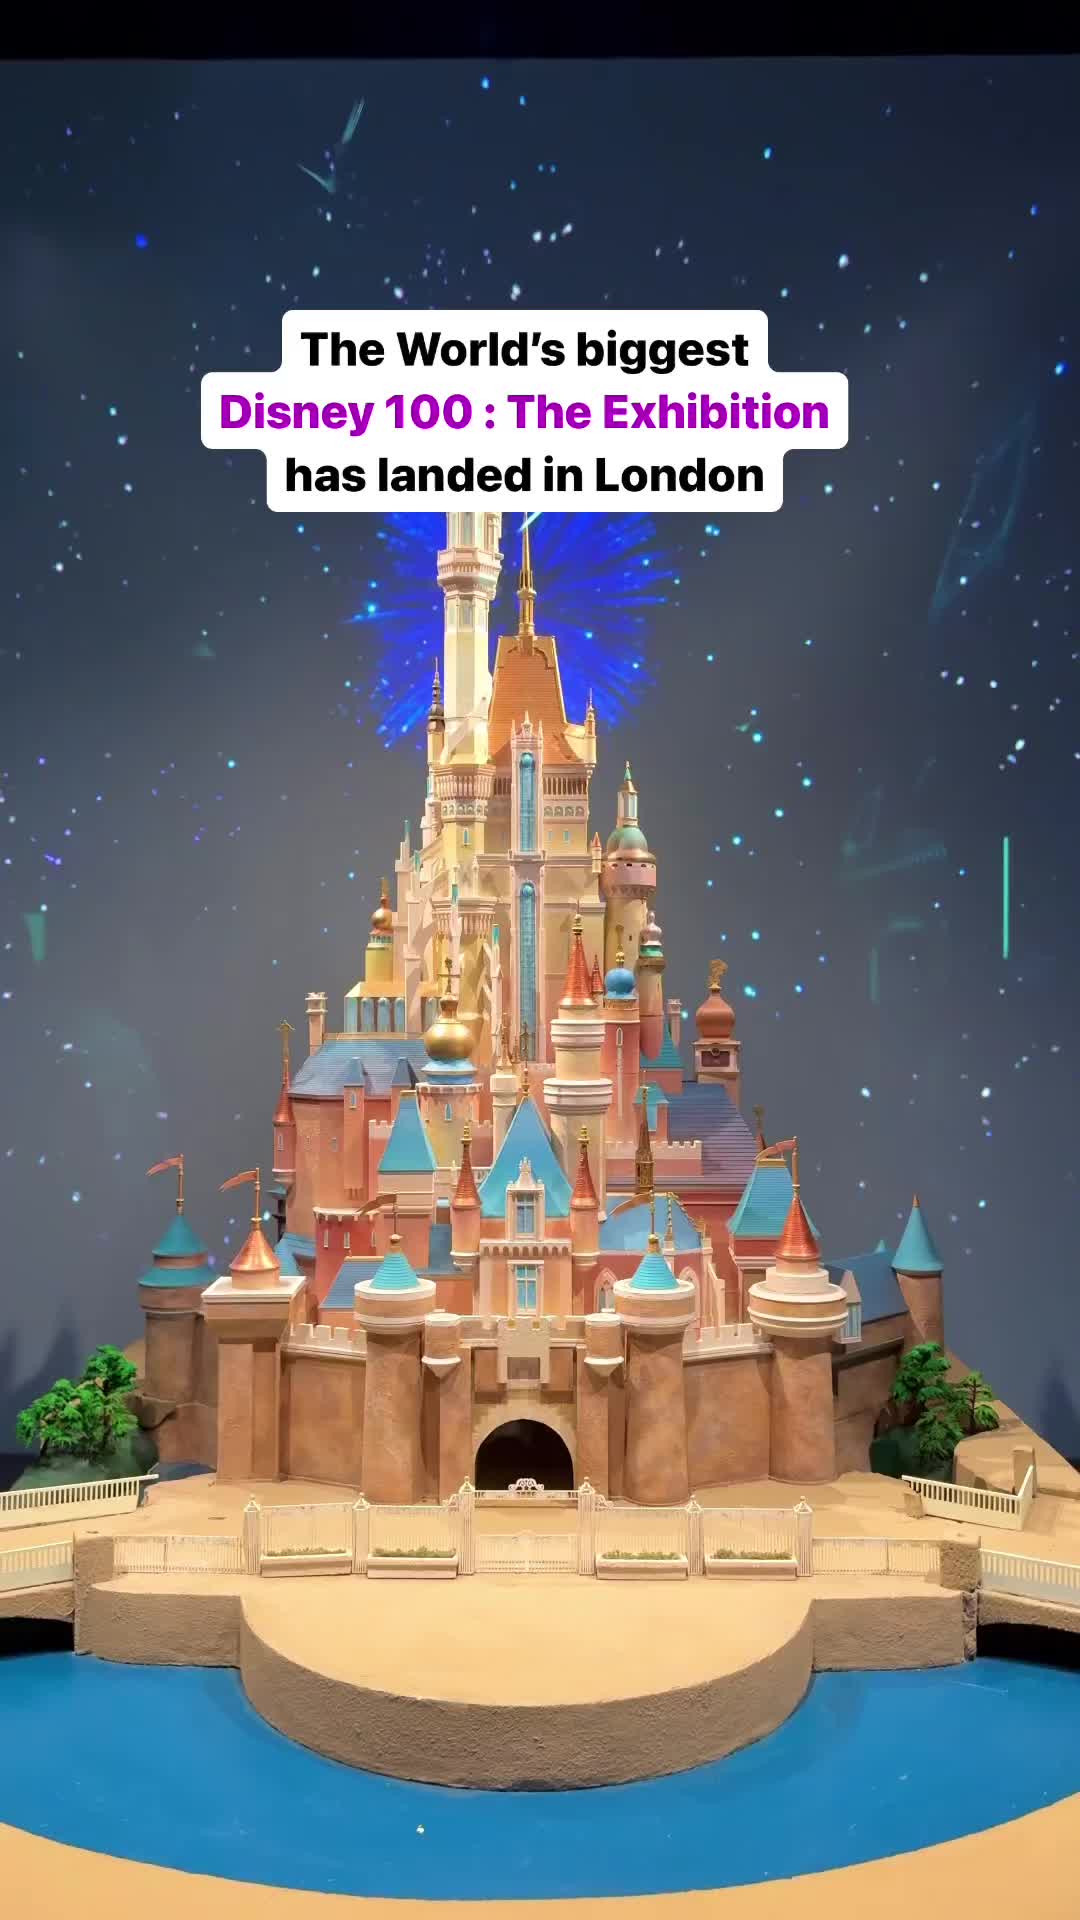 Disney 100 Exhibition in London - Get 10% Off Tickets!